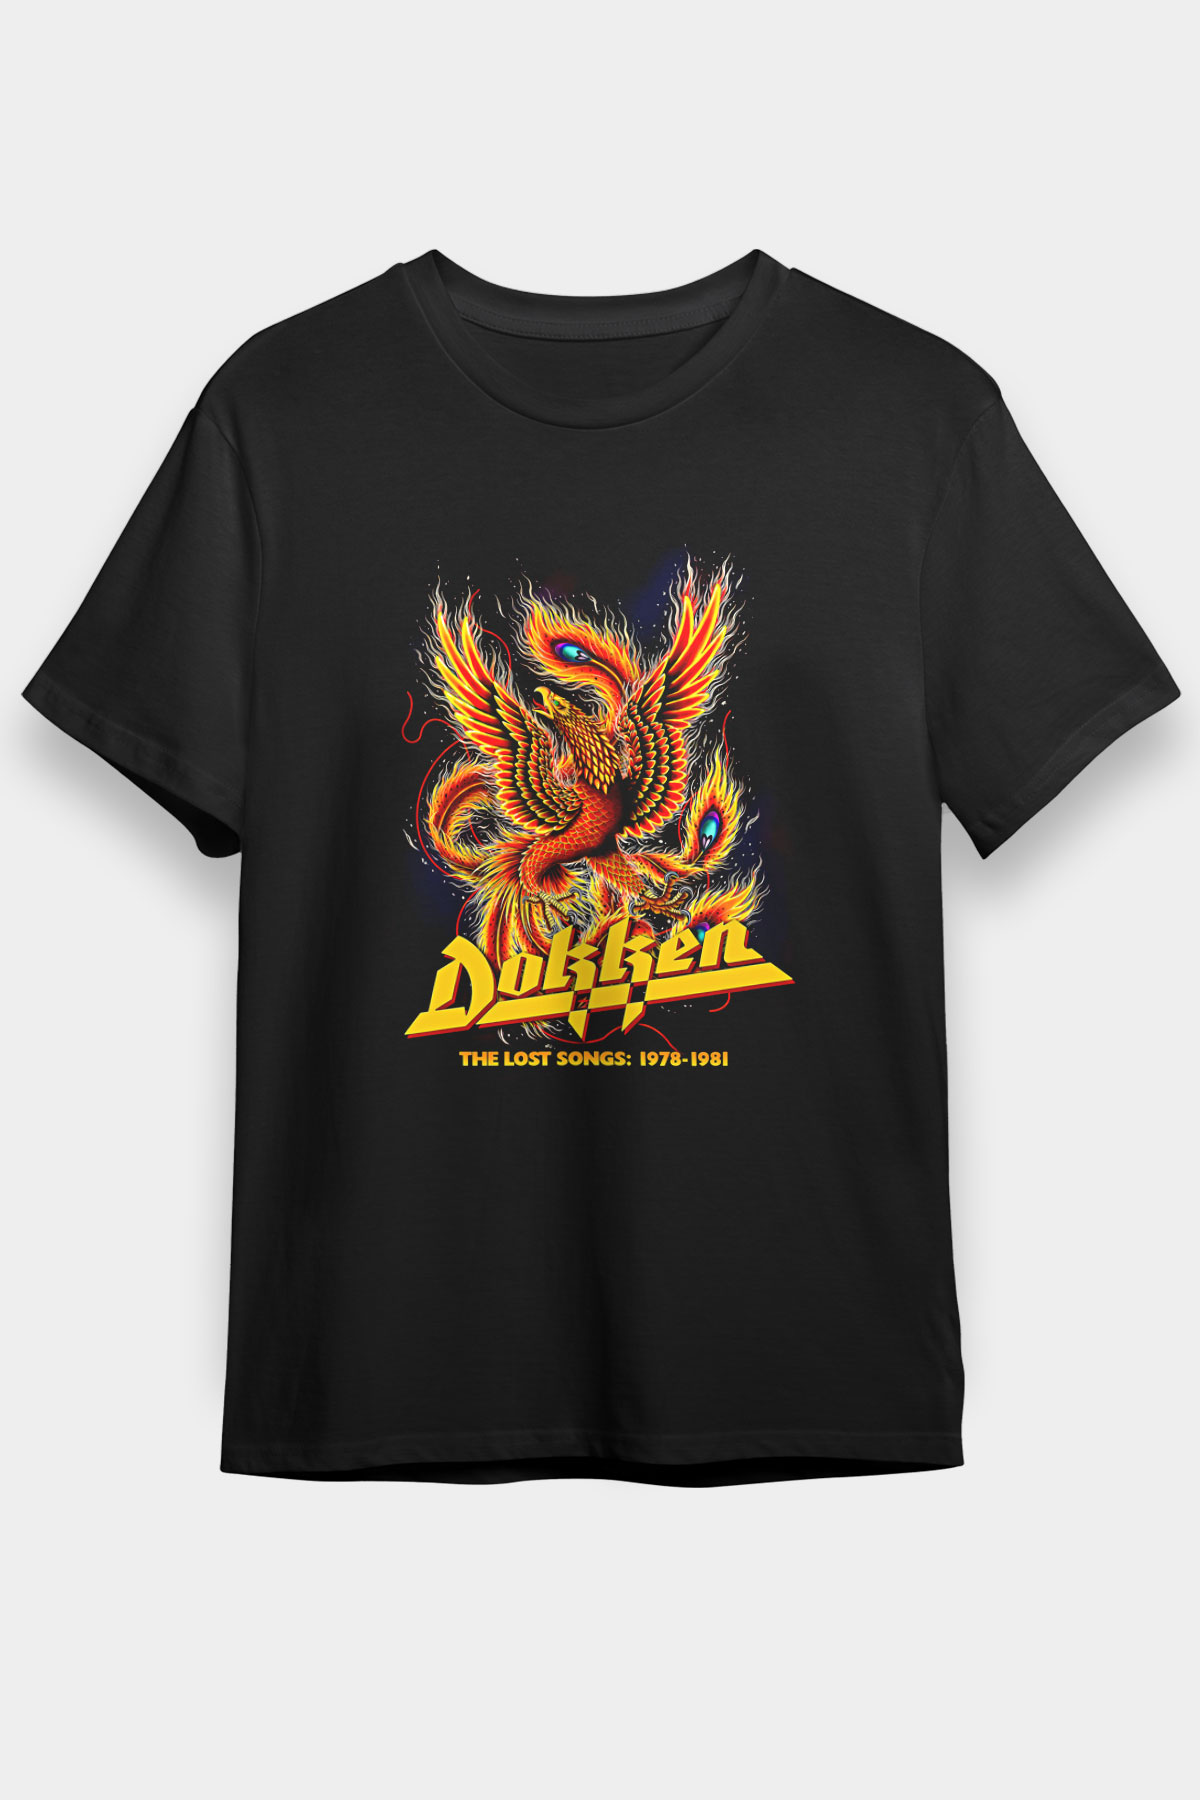 Dokken  T shirt,Music Band,Unisex Tshirt 15